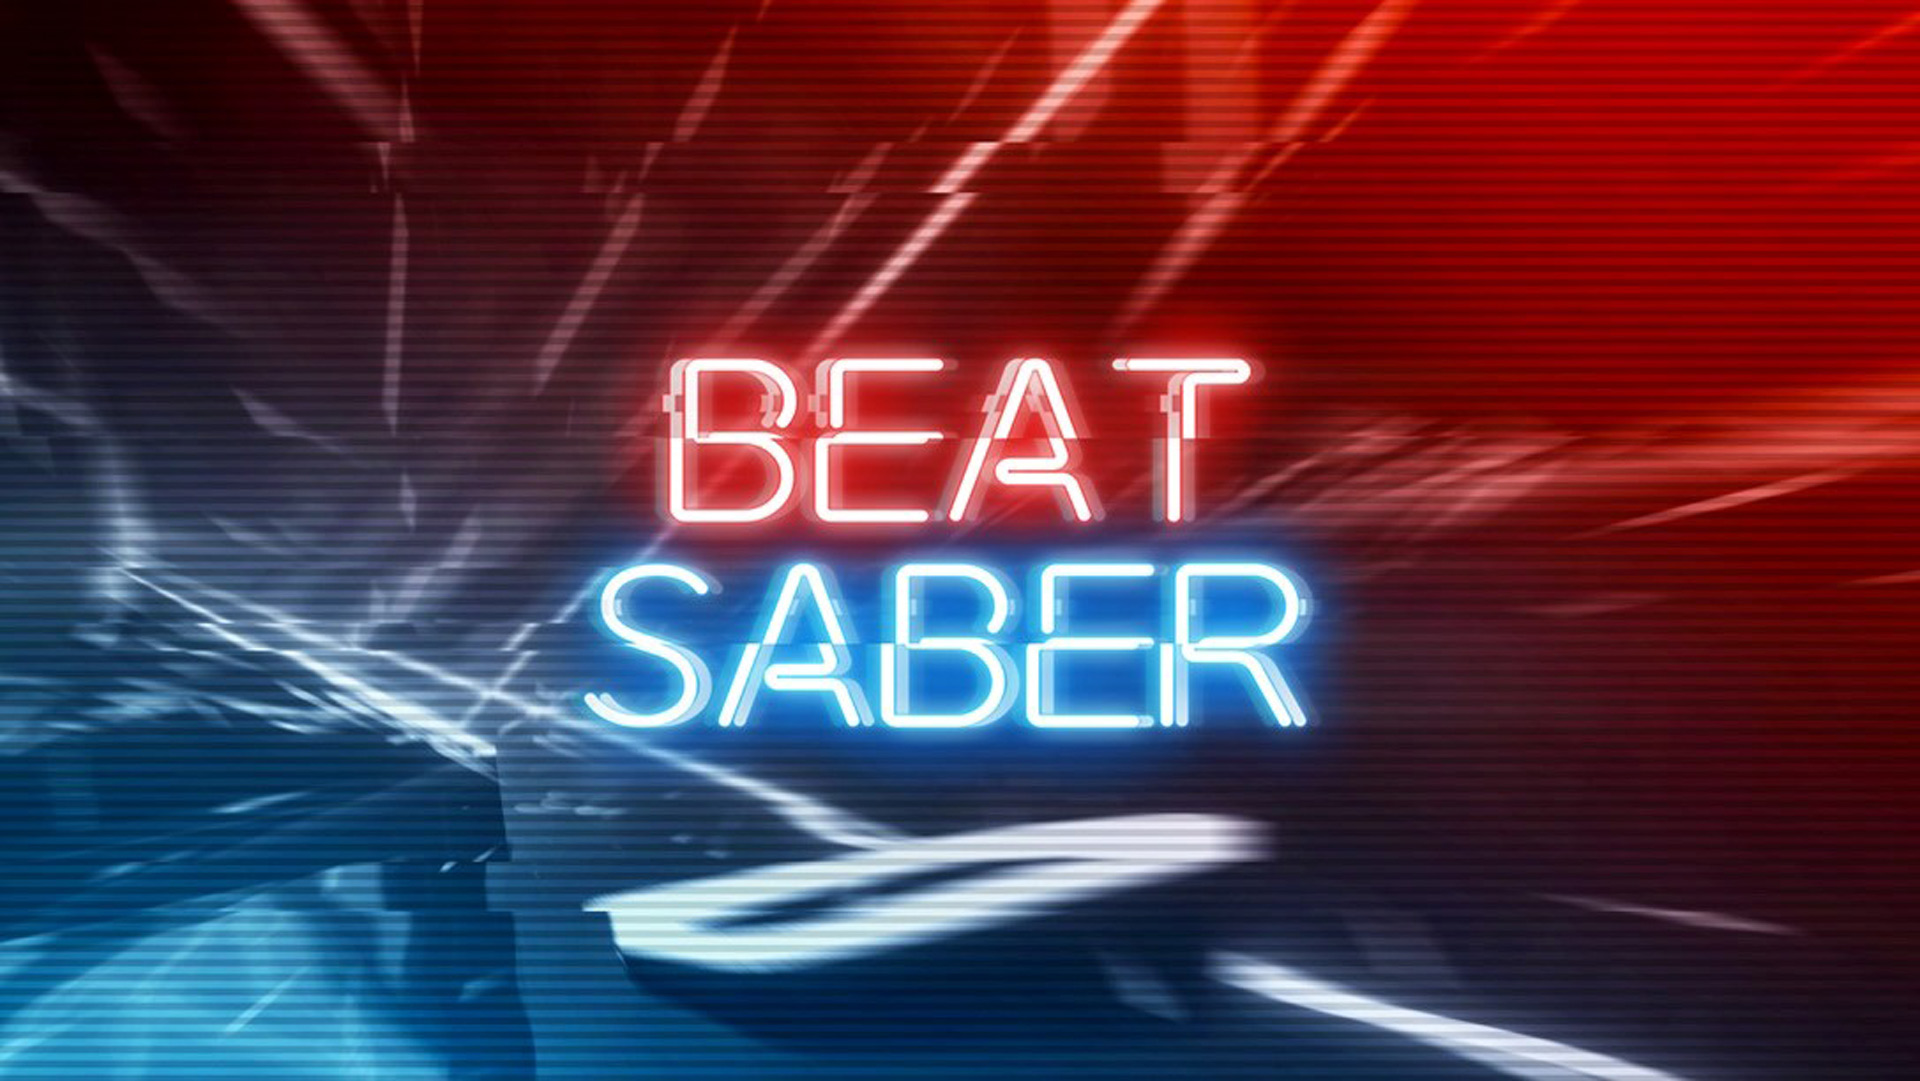 beat saber on sale